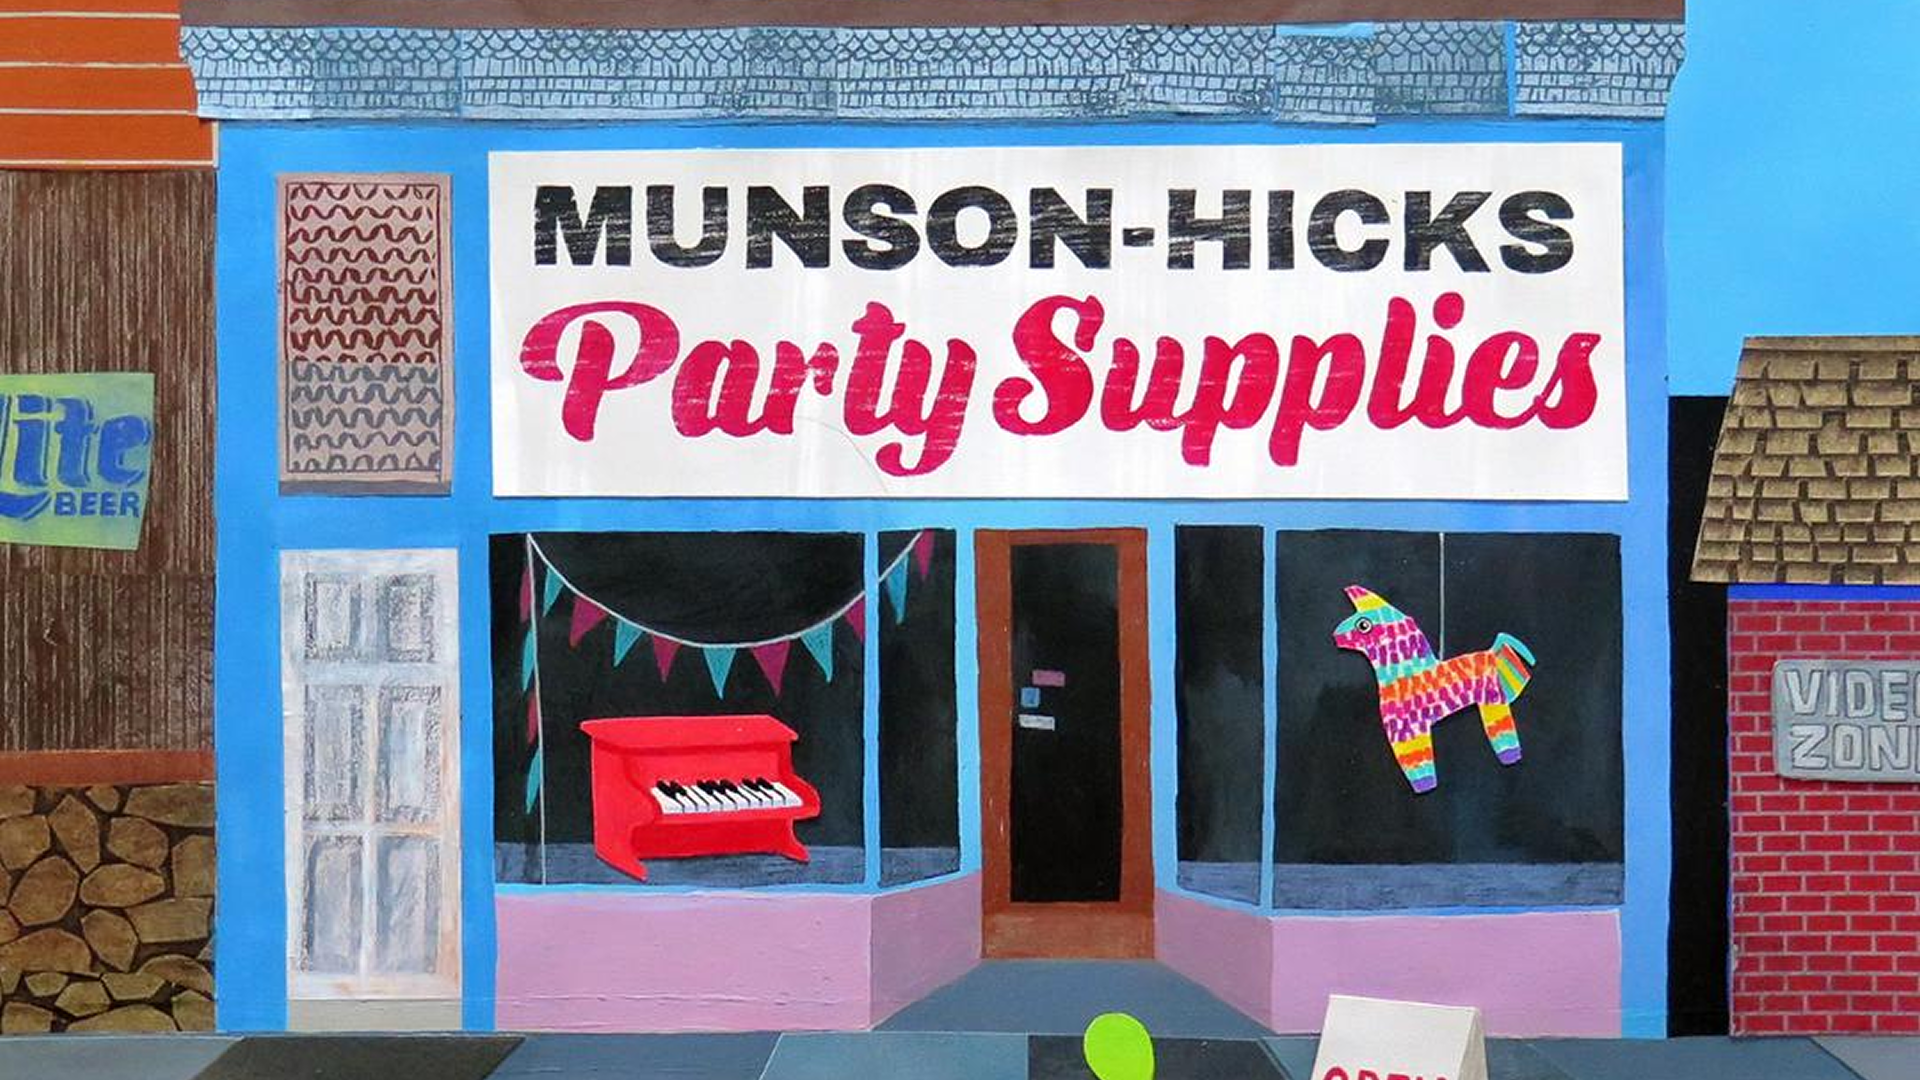 MUNSON-HICKS PARTY SUPPLIES